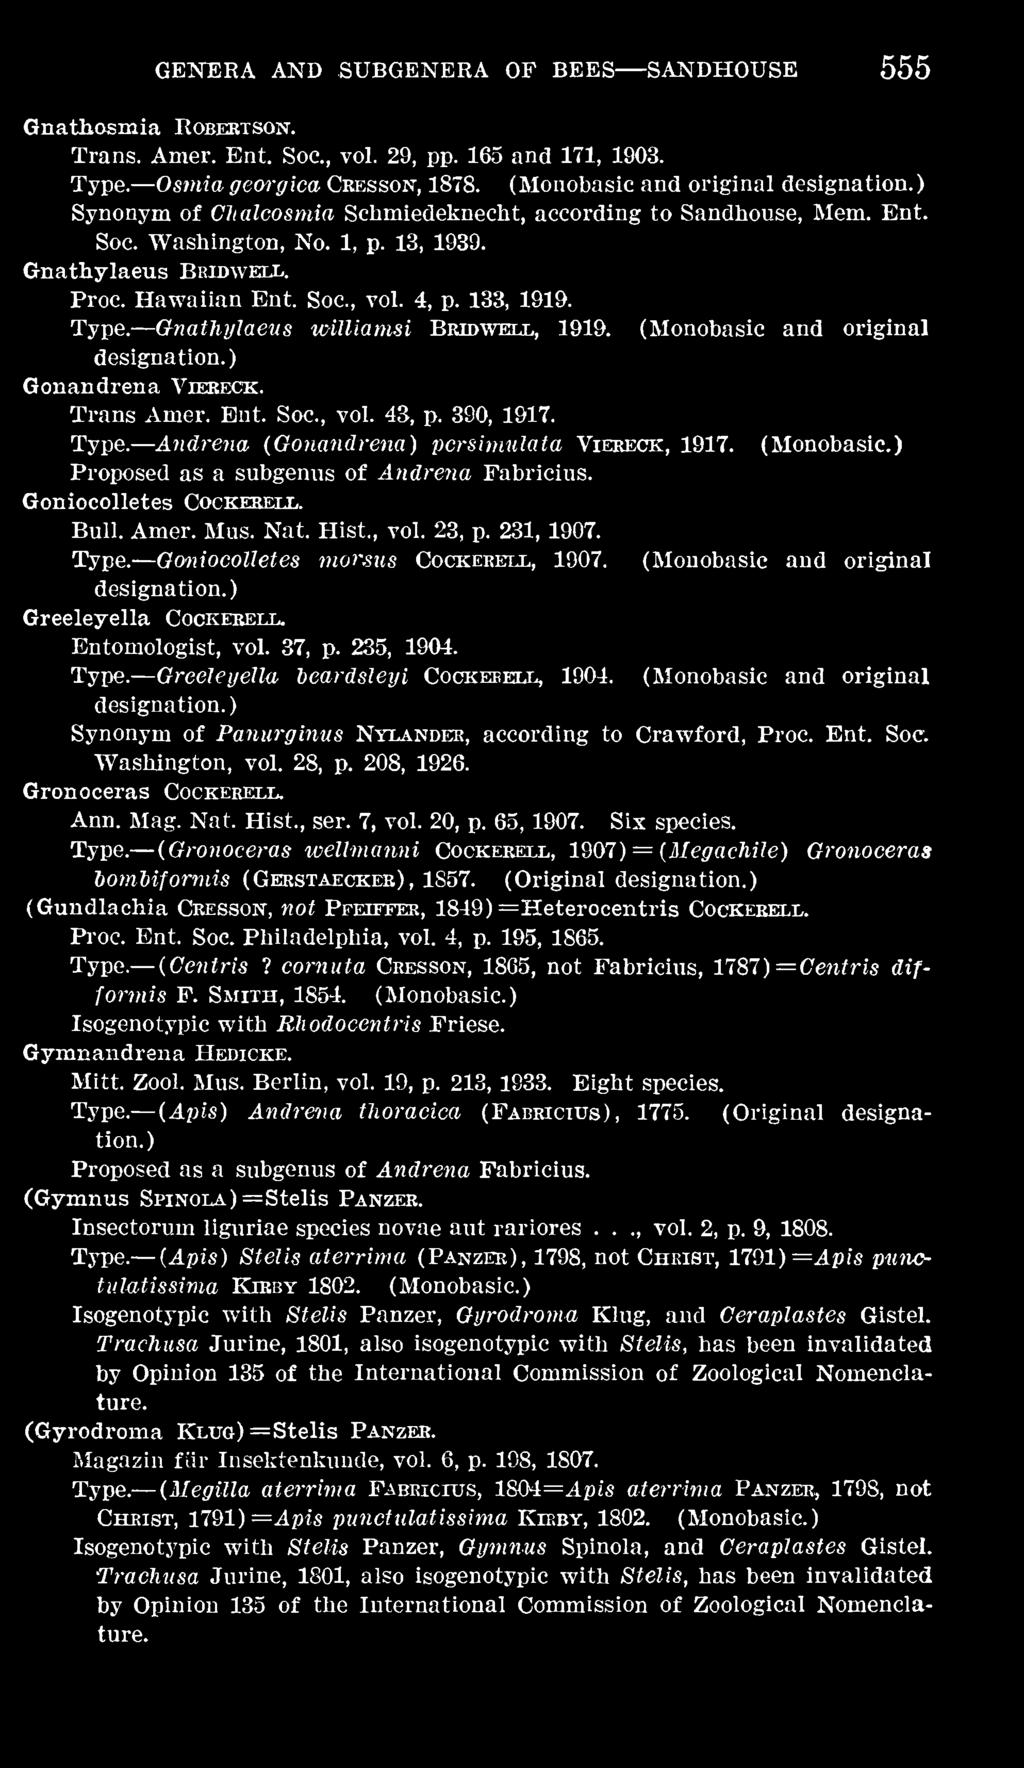 133, 1919. Gnathylaeus wiuiamsi 'Bvudwesjl,, 1919. (Monobasic and original Gonandrena Viereck. Trans Amer. Ent. Soc., vol. 43, p. 390, 1917. Andrena {Gonandrena) persimulata Viereck, 1917. (Monobasic.) Proposed as a subgenus of Andrena Fabricius.